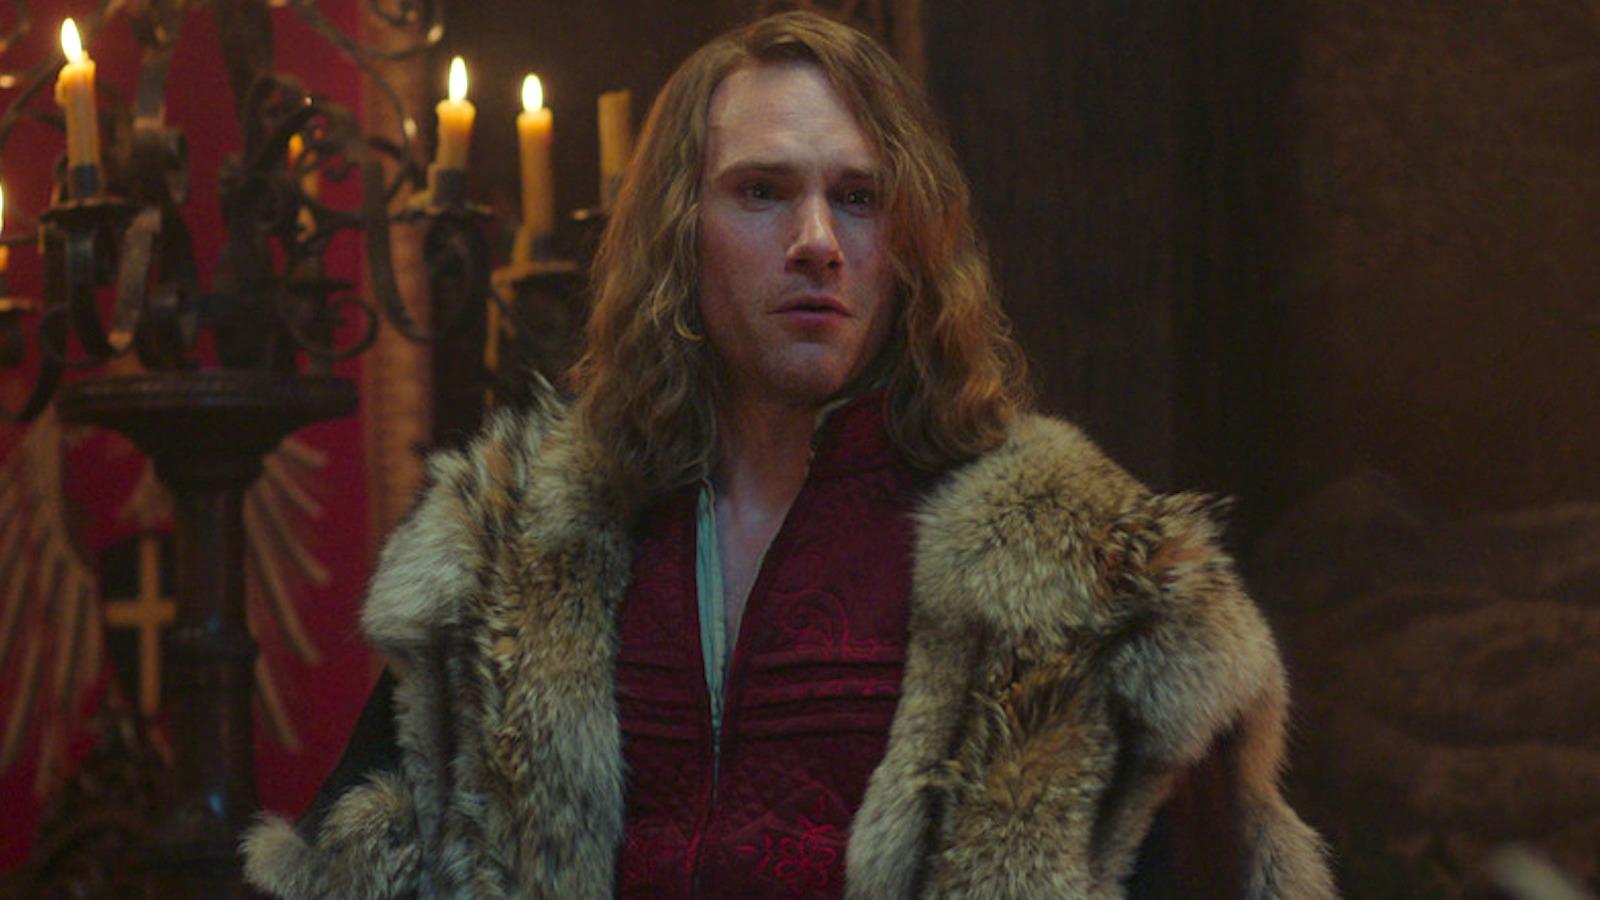 Hugh Skinner as Prince Radovid in The Witcher Season 3